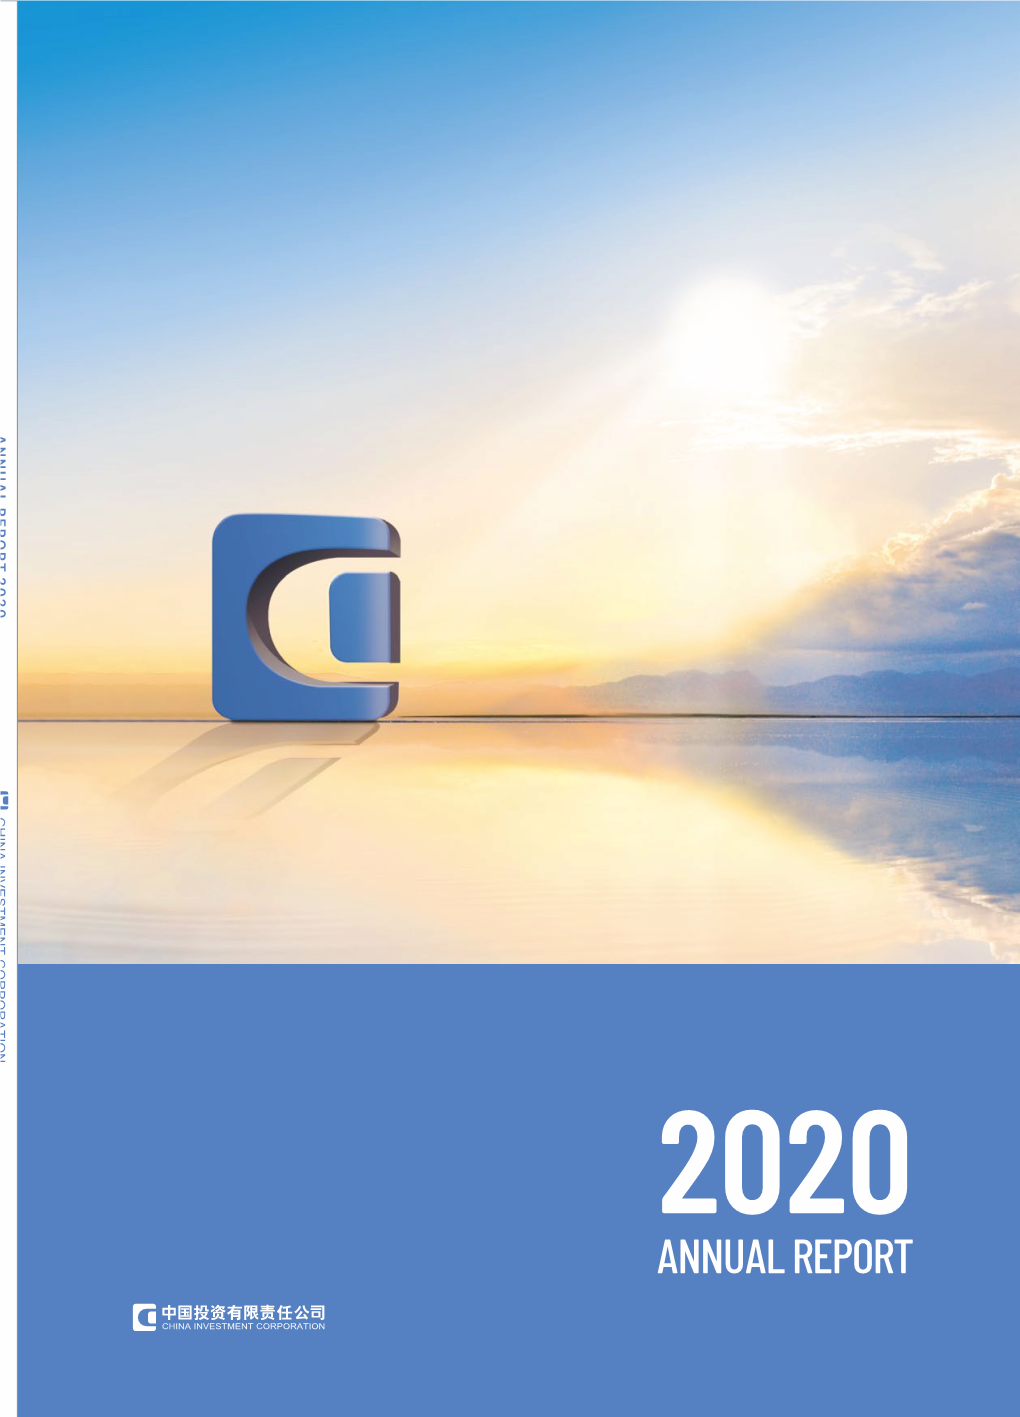 CIC Annual Report 2020